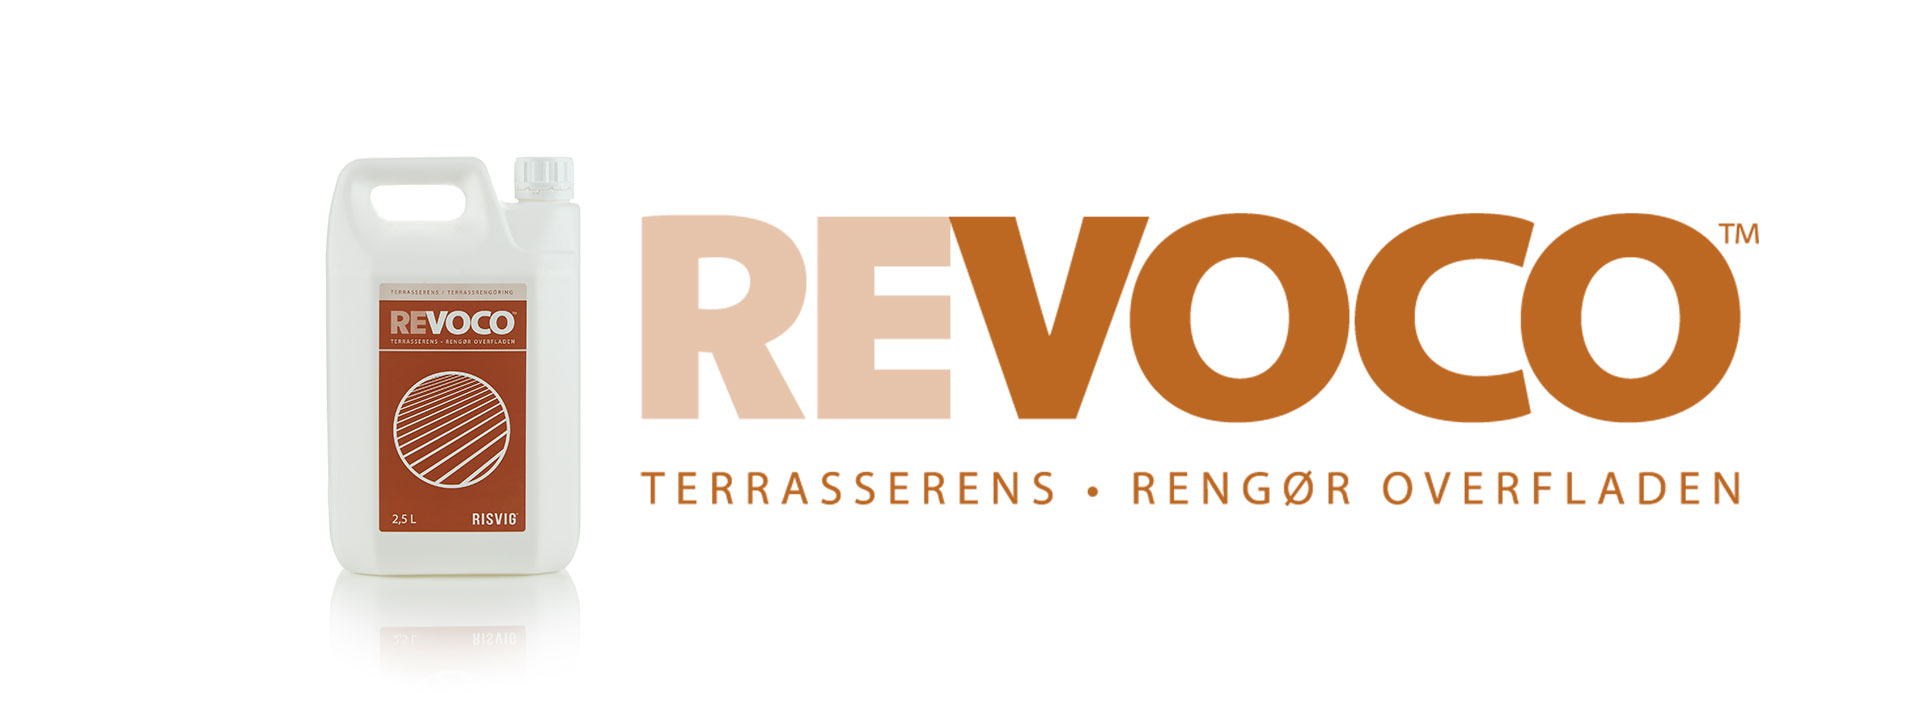 REVOCO Terrasserens fra RISVIG